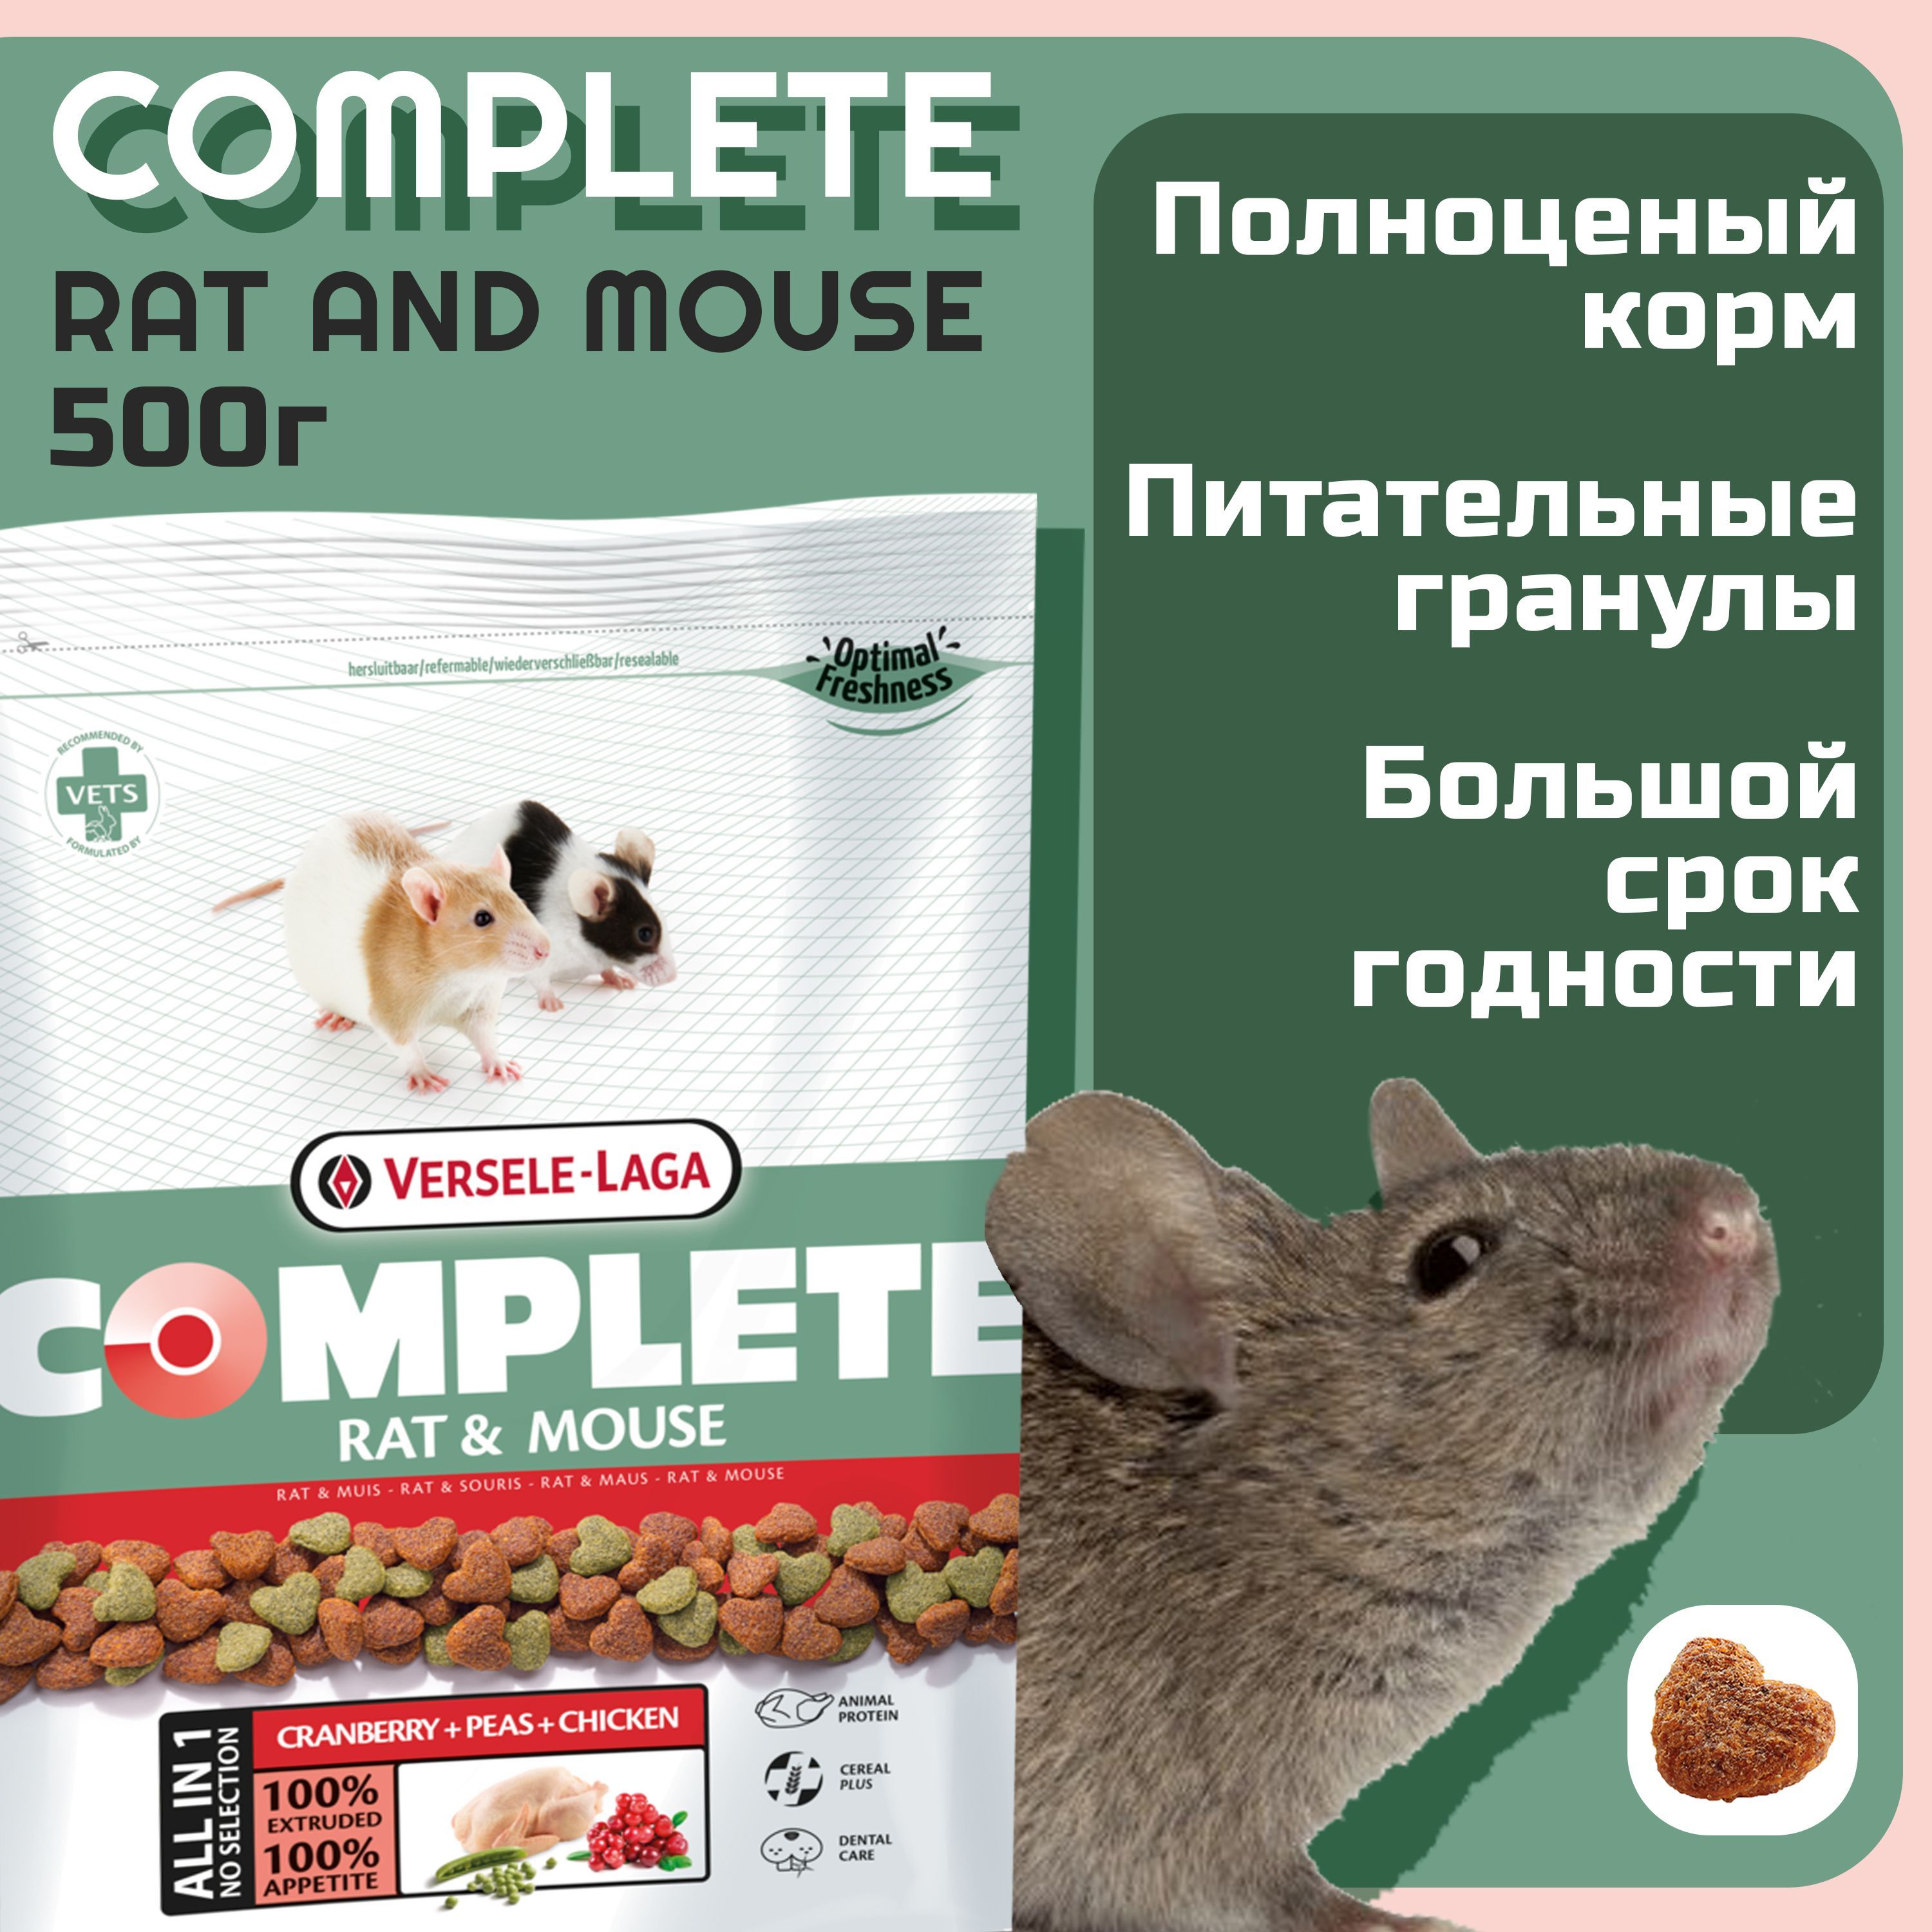 Rat & Mouse - Versele-Laga